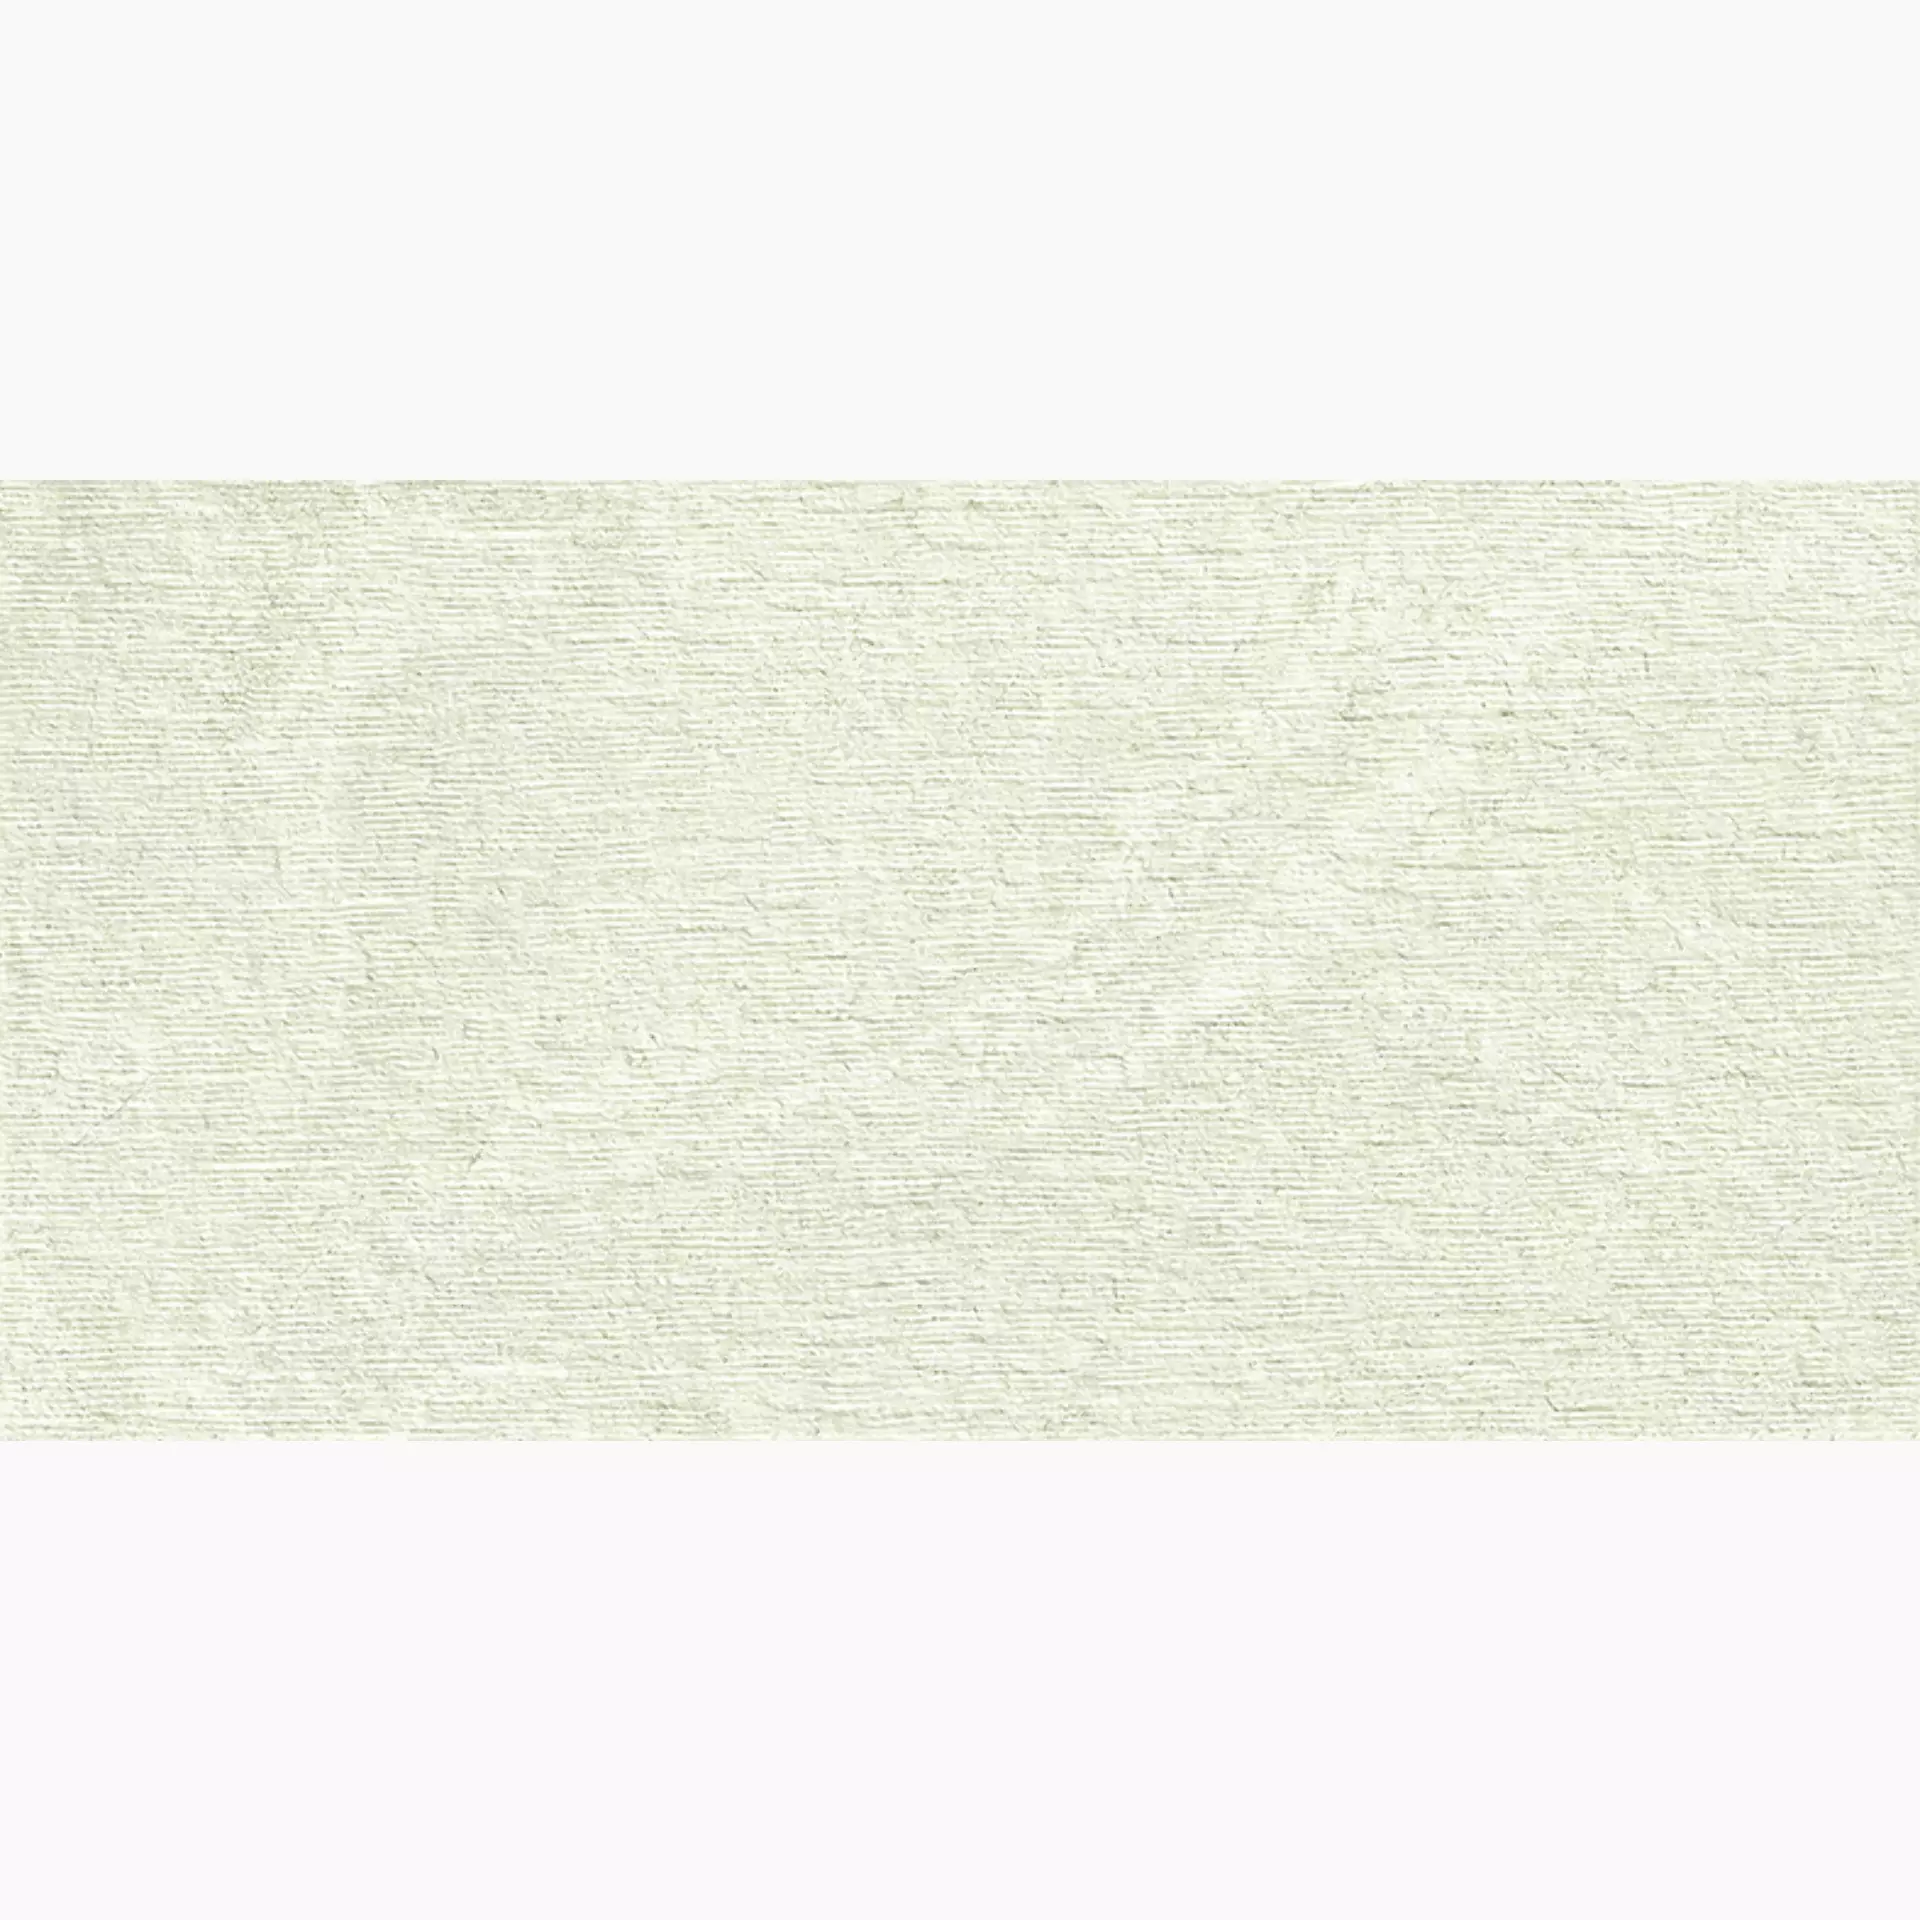 Provenza Unique Travertine Ruled White Naturale EJ91 60x120cm rectified 9,5mm